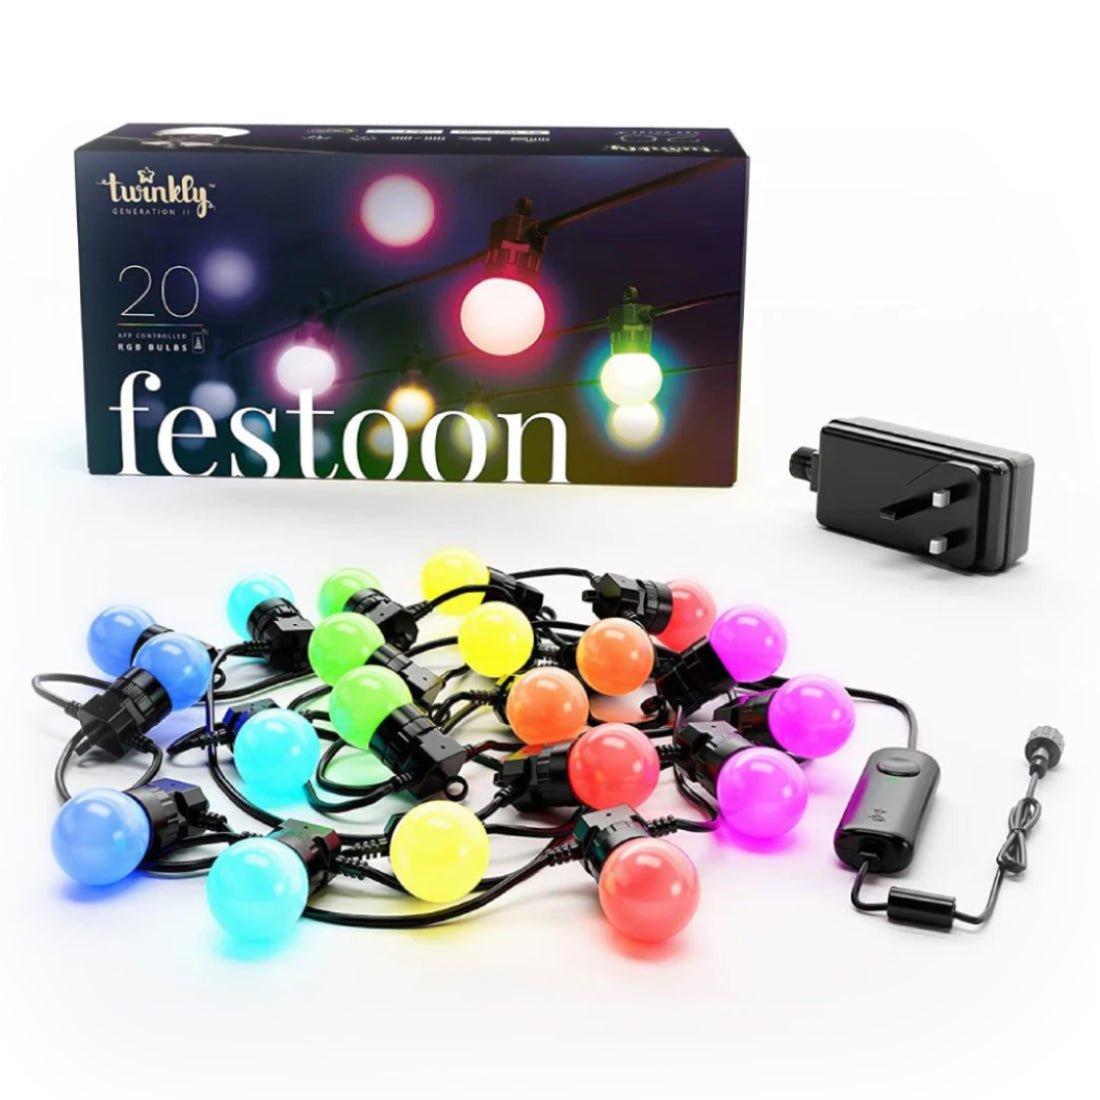 Twinkly Festoon 20 App-Controlled RGB Light Bulbs - Black Wire - إضاءة - Store 974 | ستور ٩٧٤